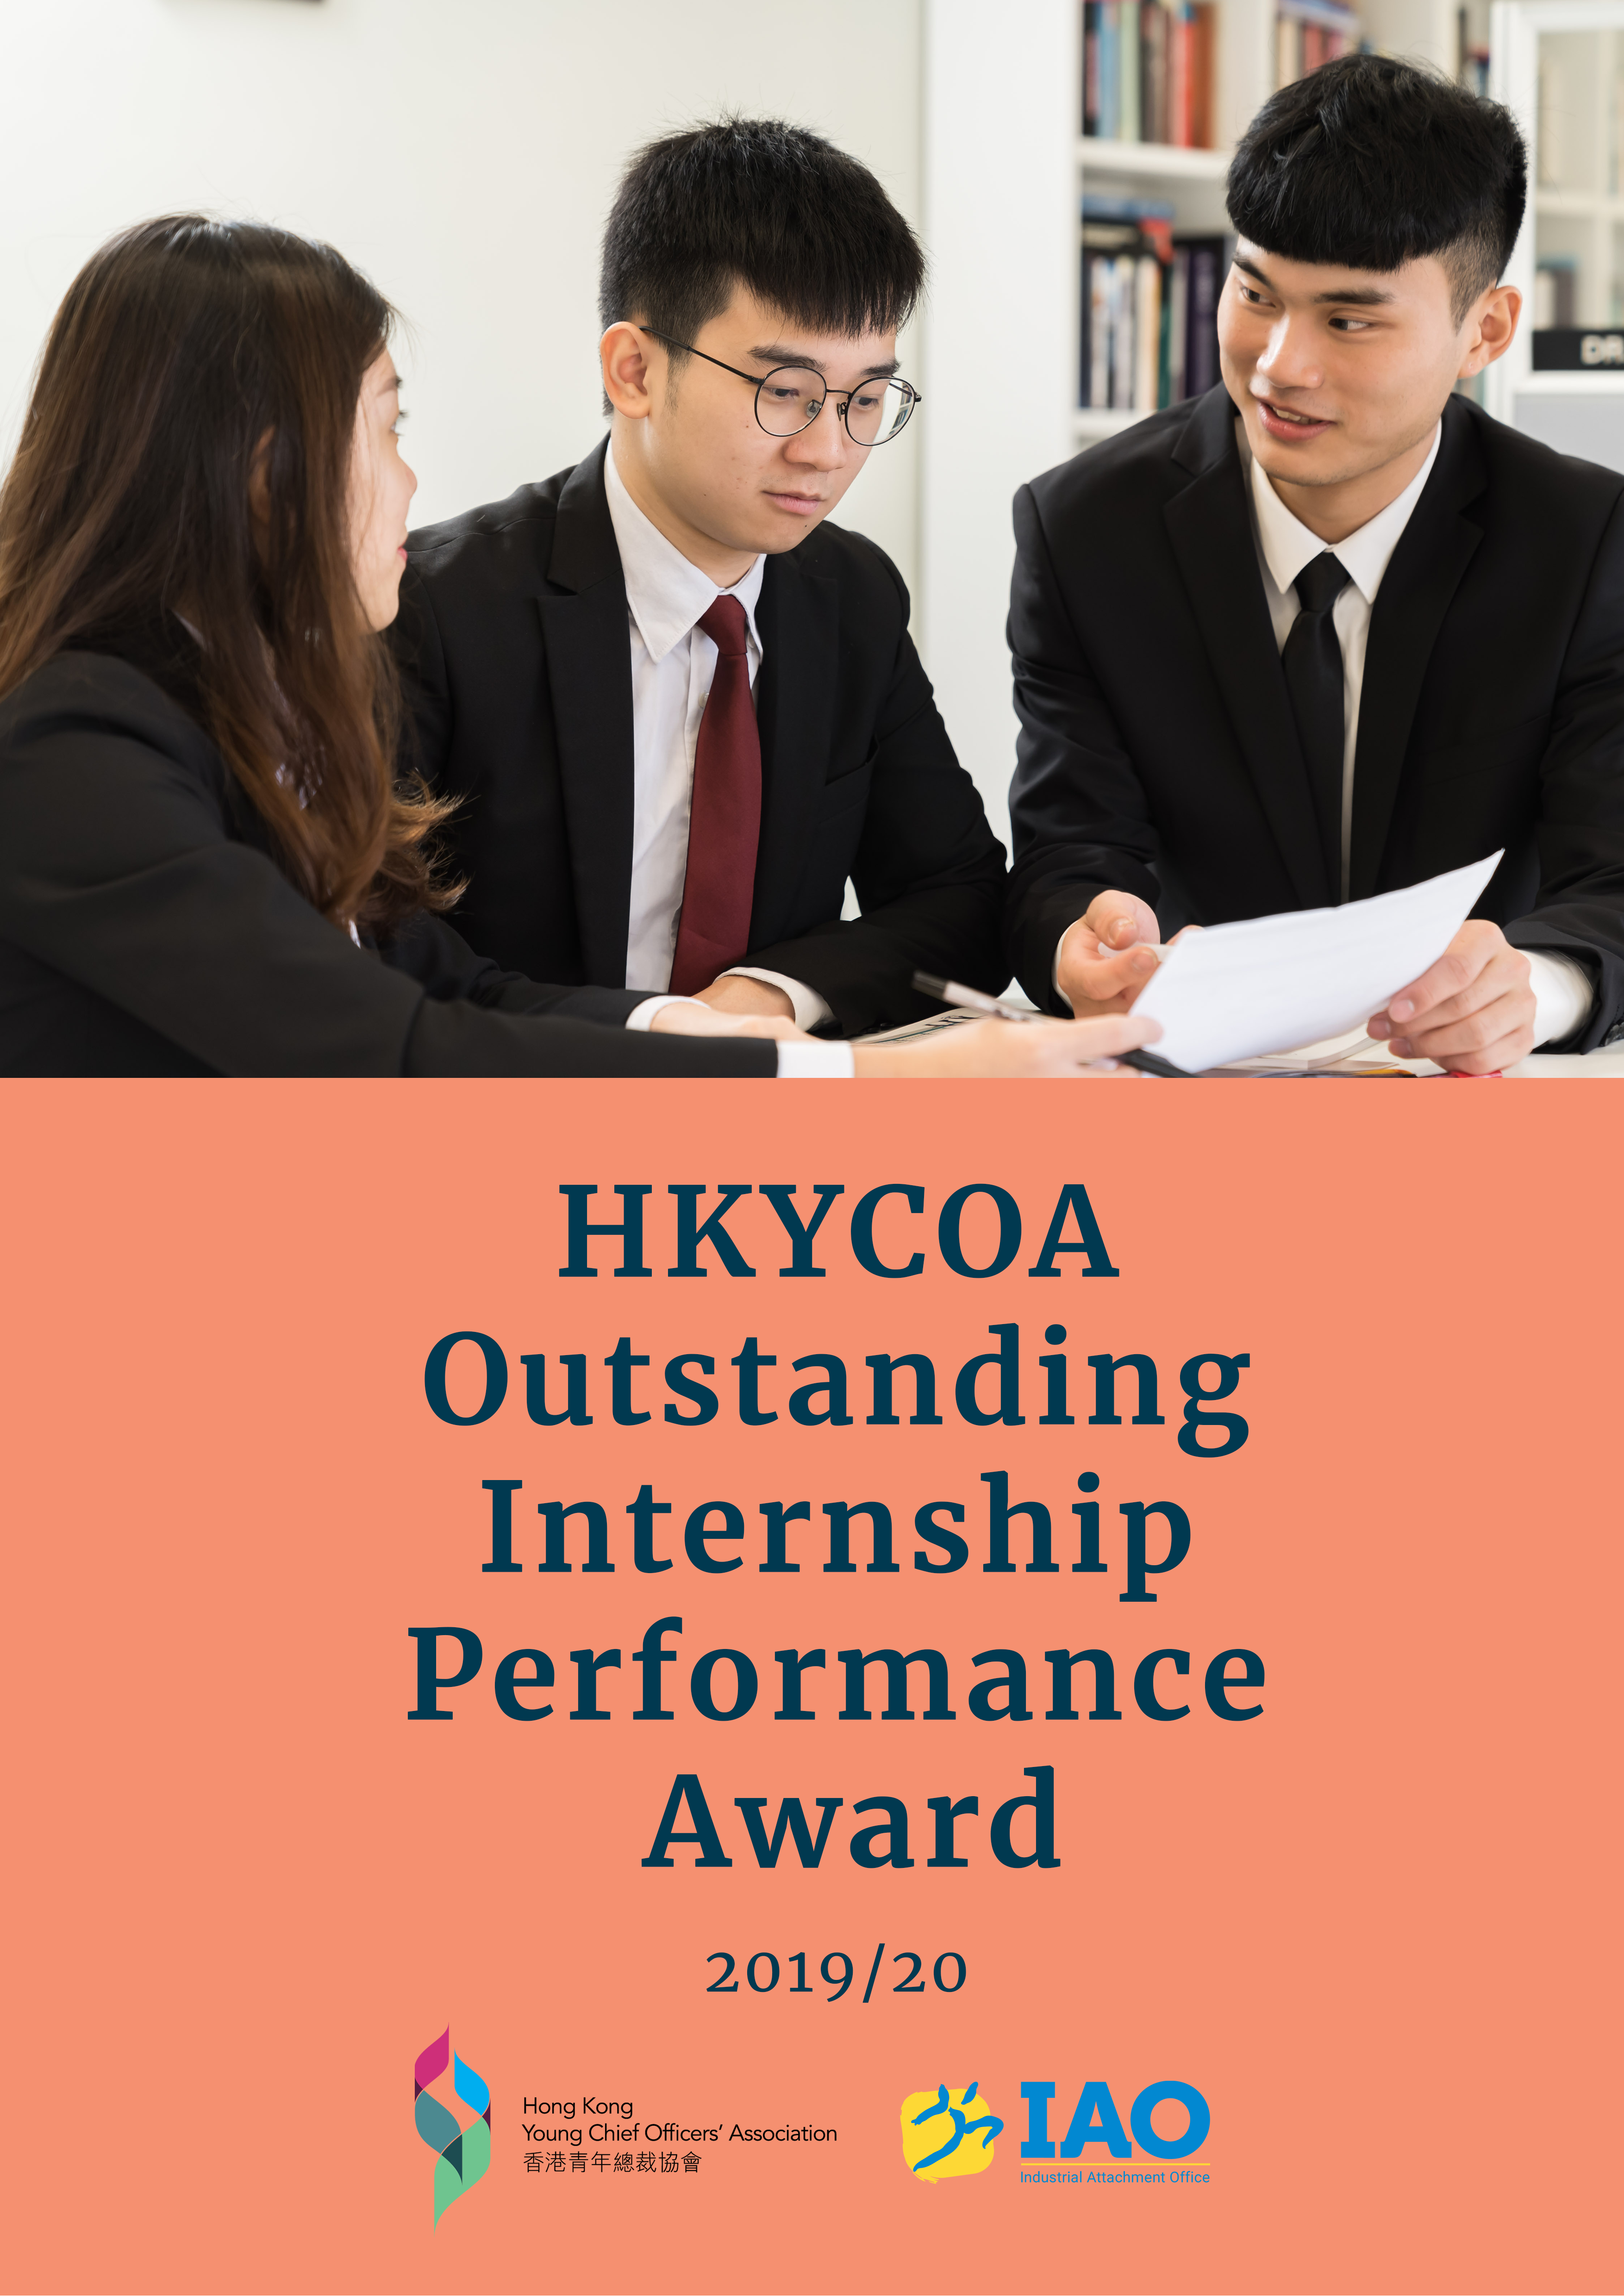 HKYCOA Outstanding Internship Performance Award 2019/20 Student Sharings